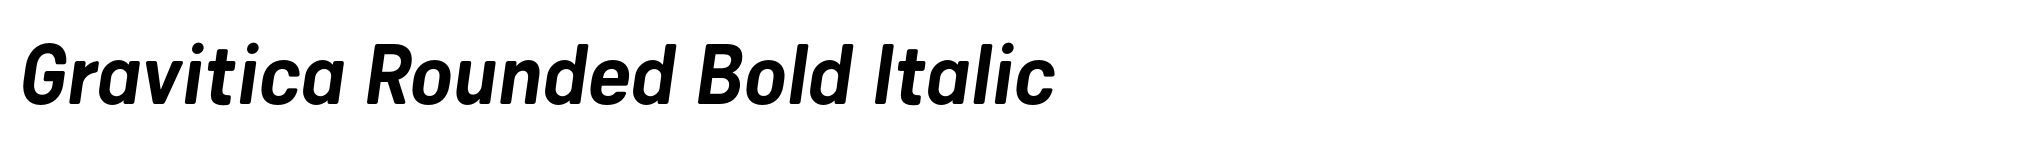 Gravitica Rounded Bold Italic image